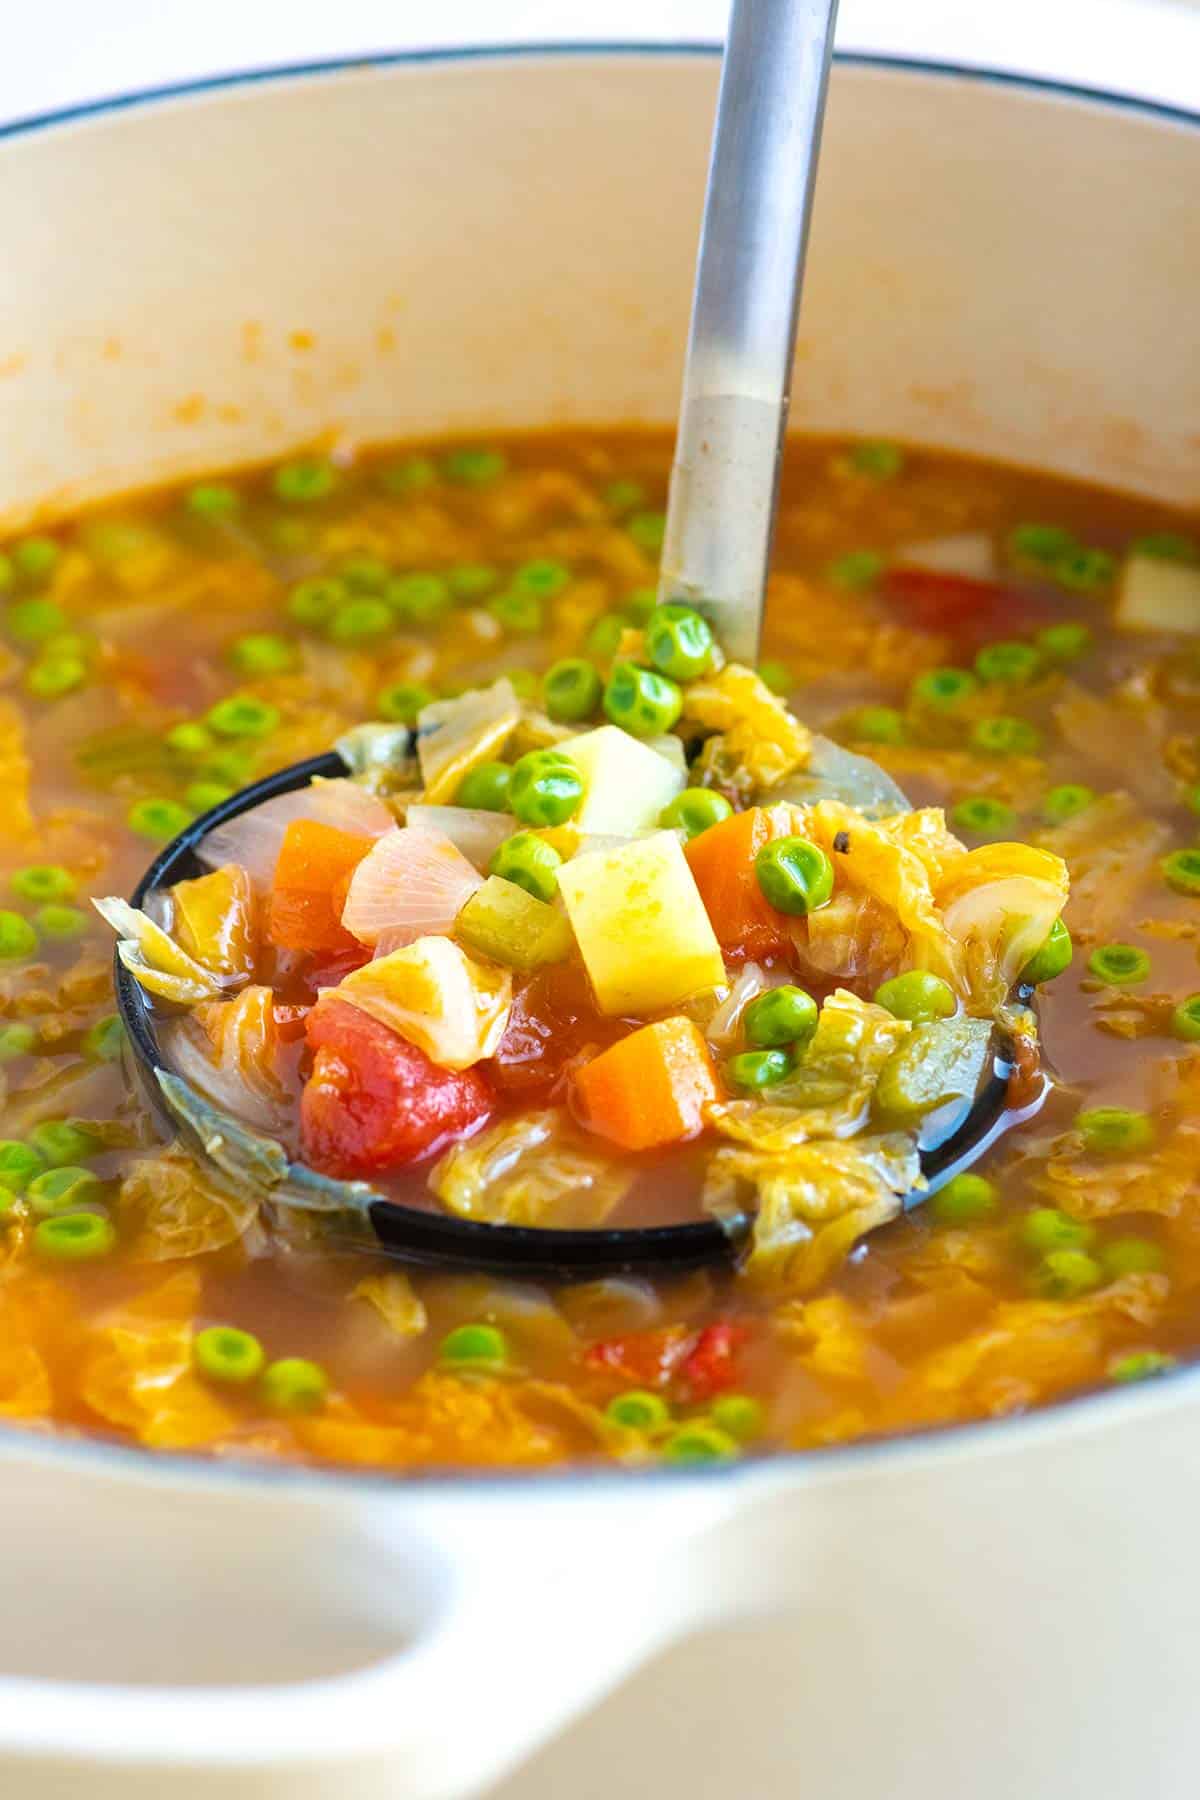 Recipe for homemade vegetable soup